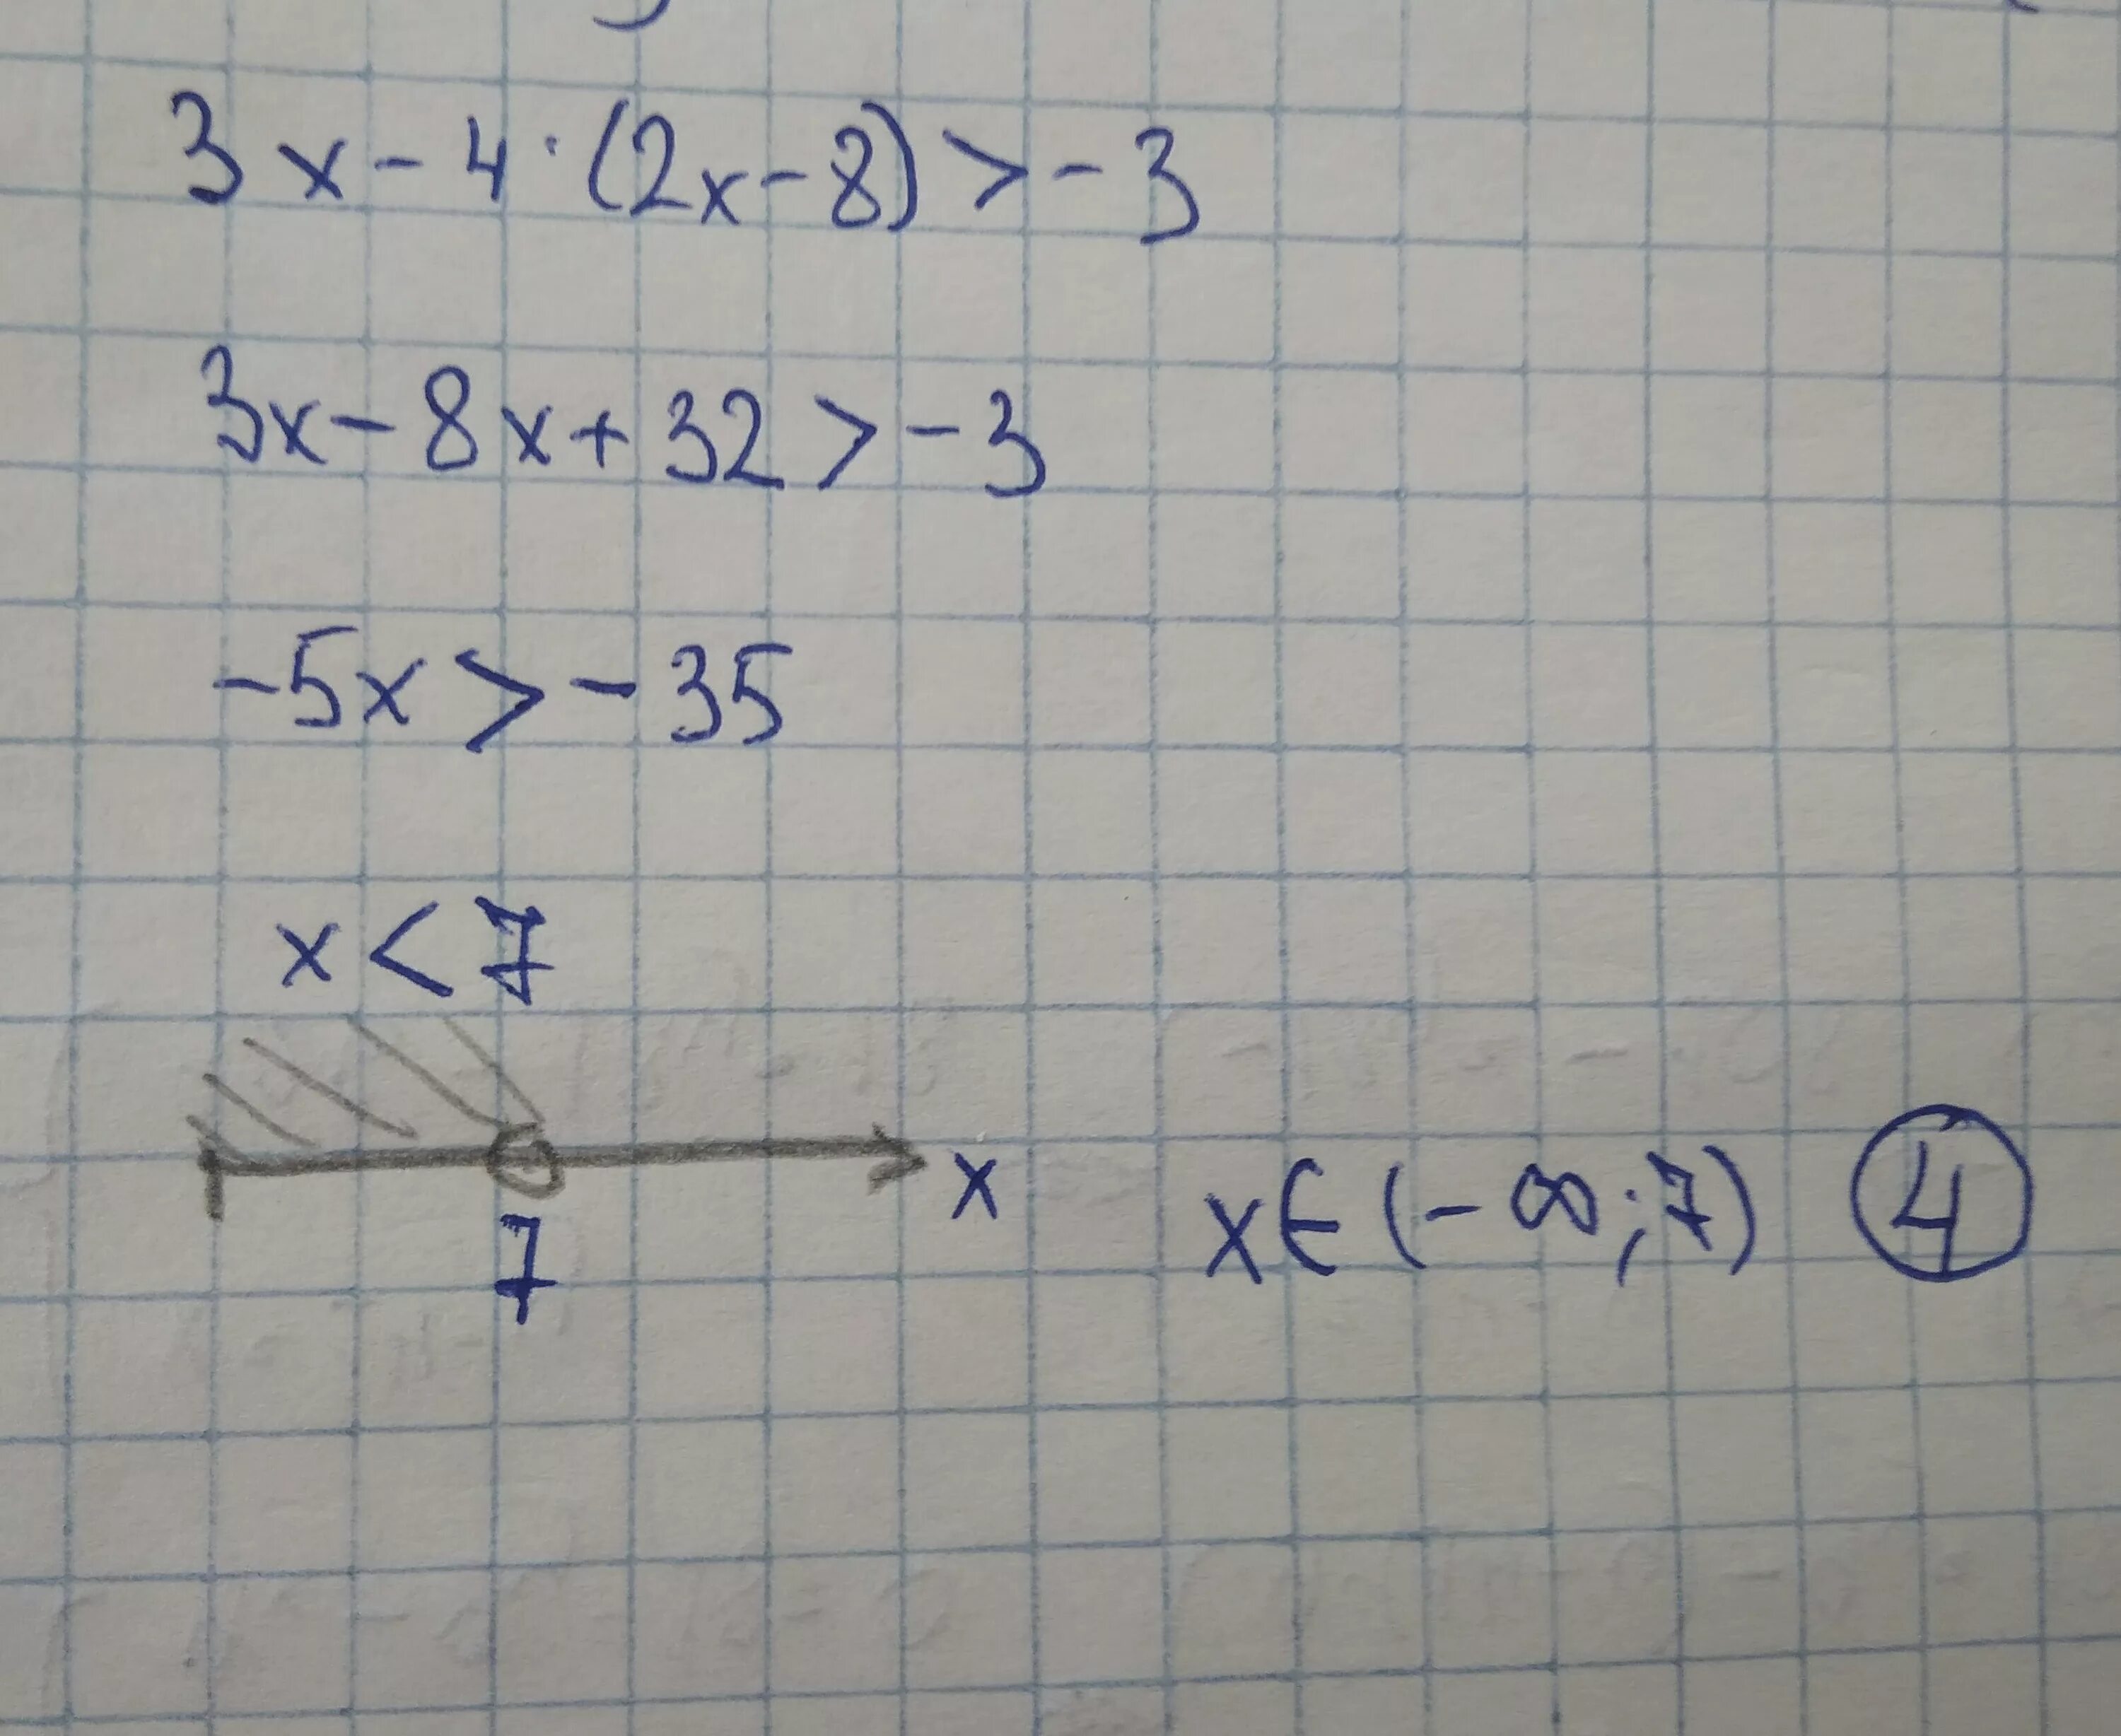 5х 4 3 неравенства. Решение неравенство 3x - 4 (x+1)<5x+8. Решением неравенства 3x-1>4. Неравенство (x+1)(x-4)(x=6)<0. Решение неравенство (x-8)(3-x)(1,5-x)<0.